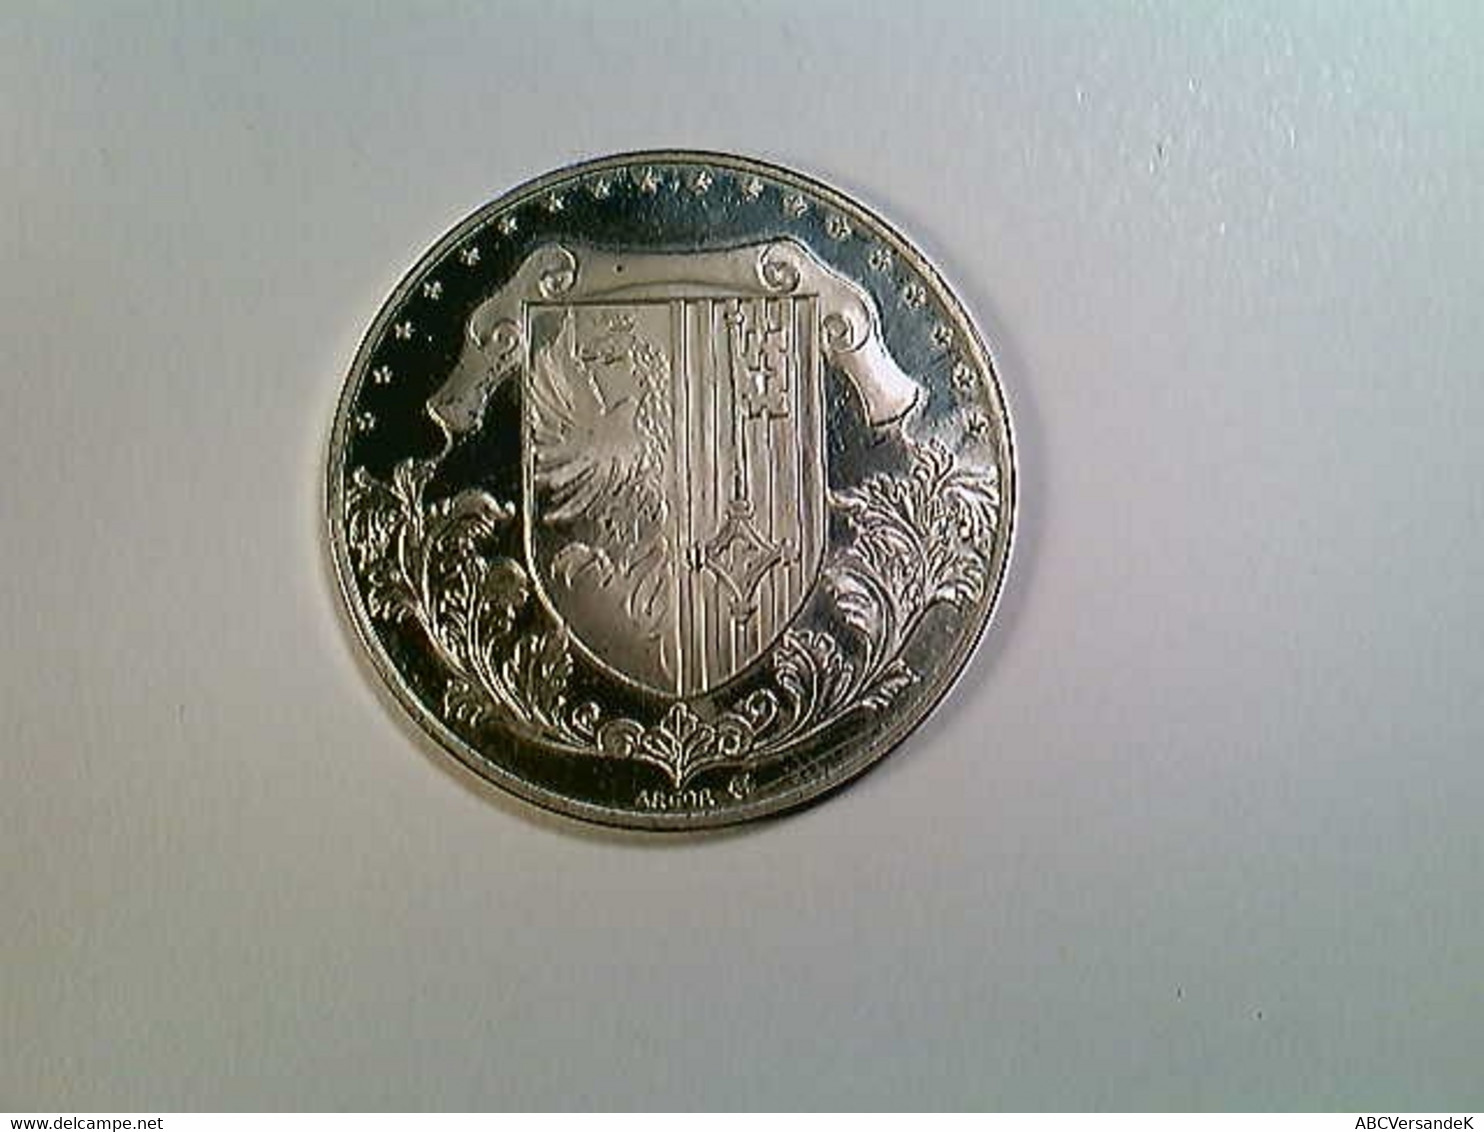 Münze Republica Geneva 1814-1964, Schweiz Kantonalmünze, Argor, Silber, SELTEN! - Numismatique